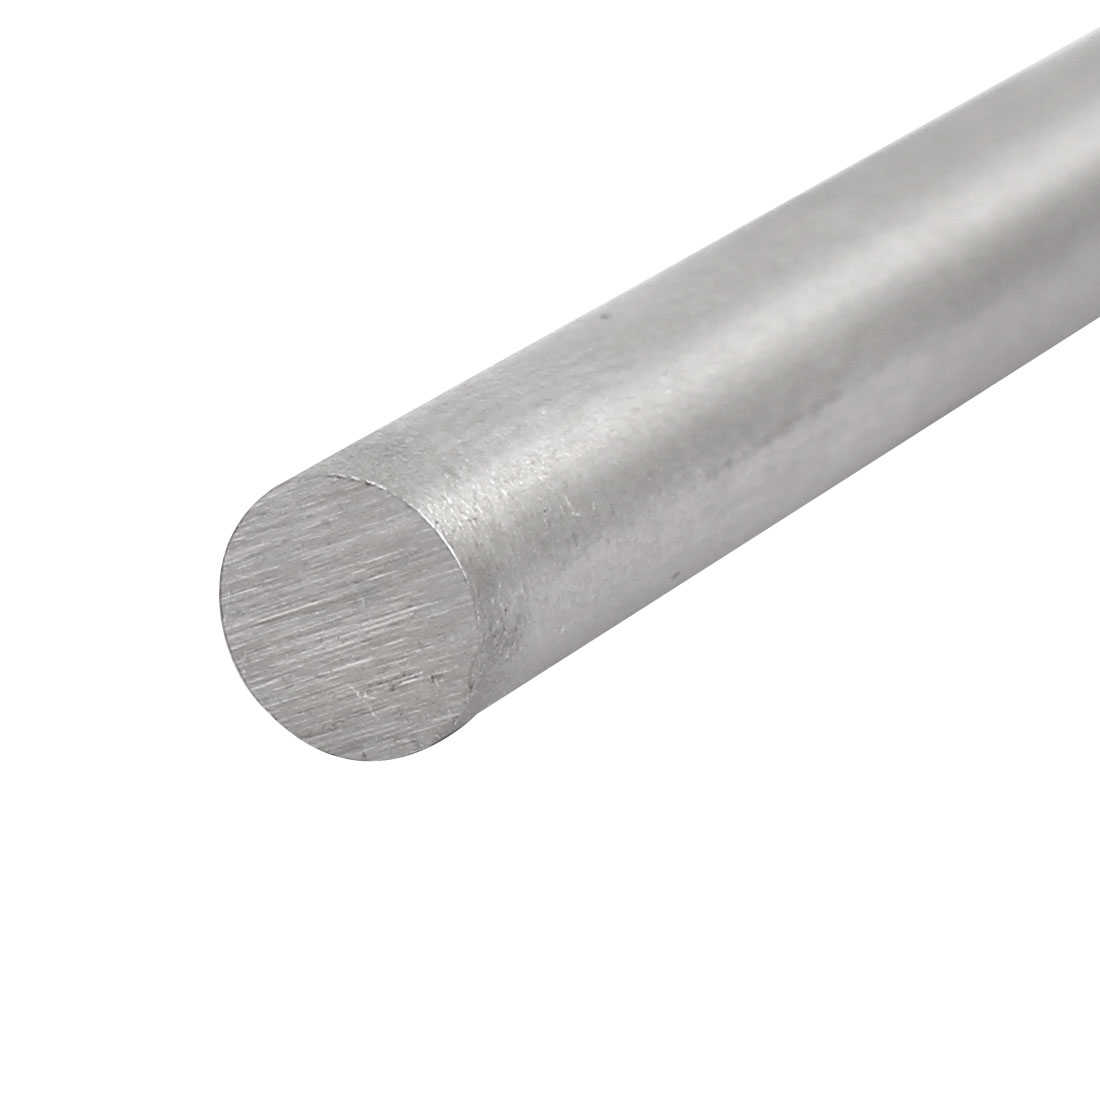 6.5mm Dia 200mm Length HSS Round Shaft Rod Bar Lathe Tools Gray 2pcs